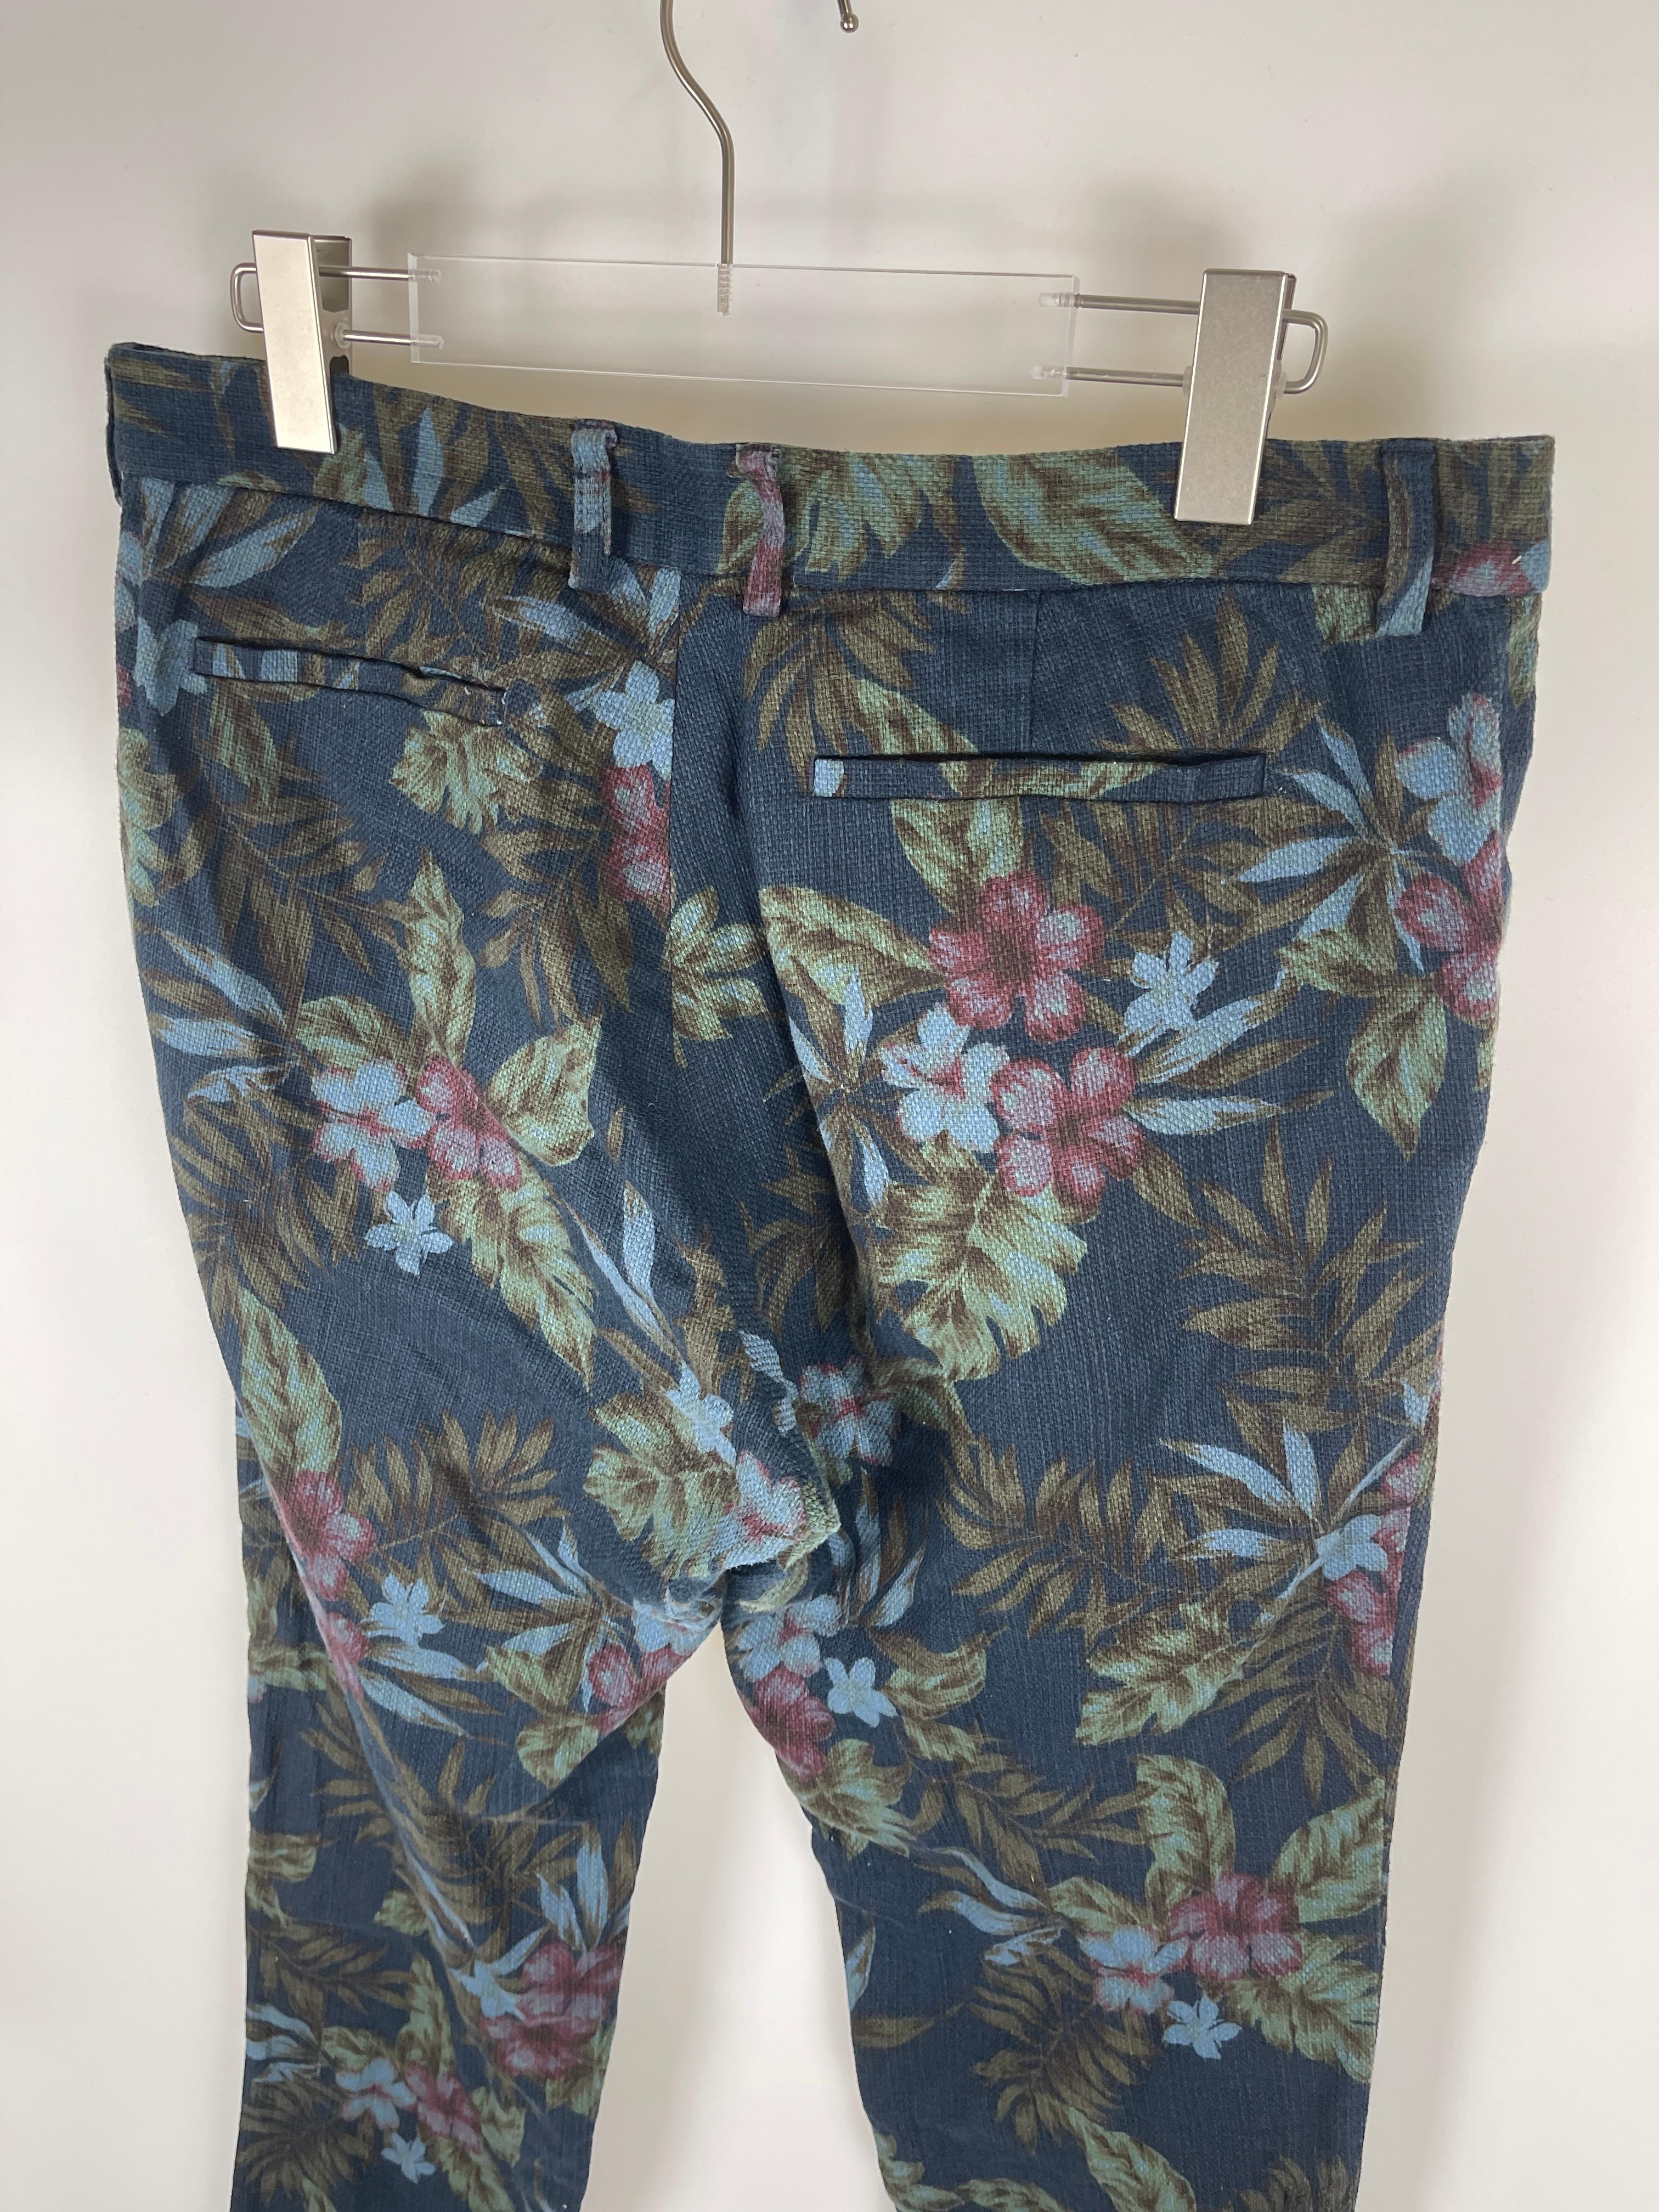 Dries Van Noten Floral Denim Pants In Excellent Condition For Sale In Seattle, WA